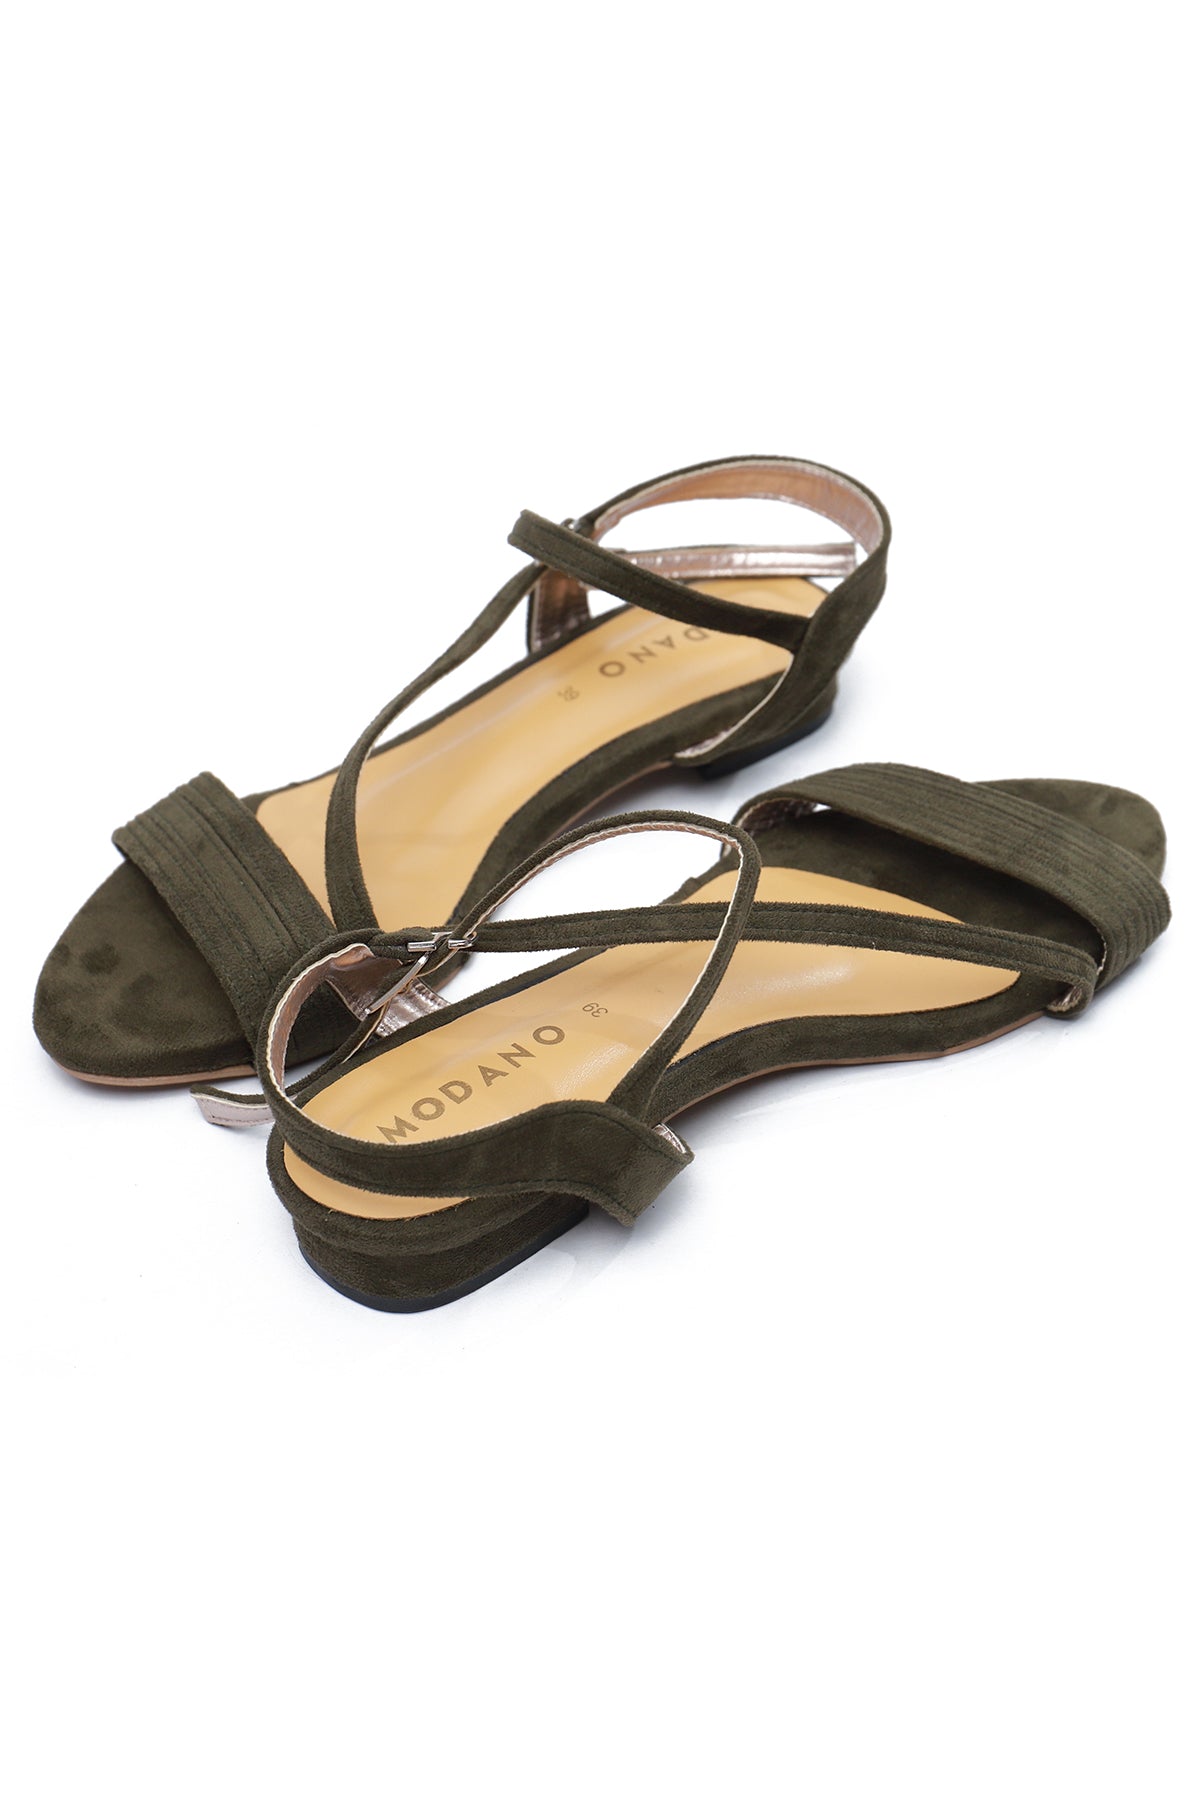 Modano Womens Casual Sandal Shoe